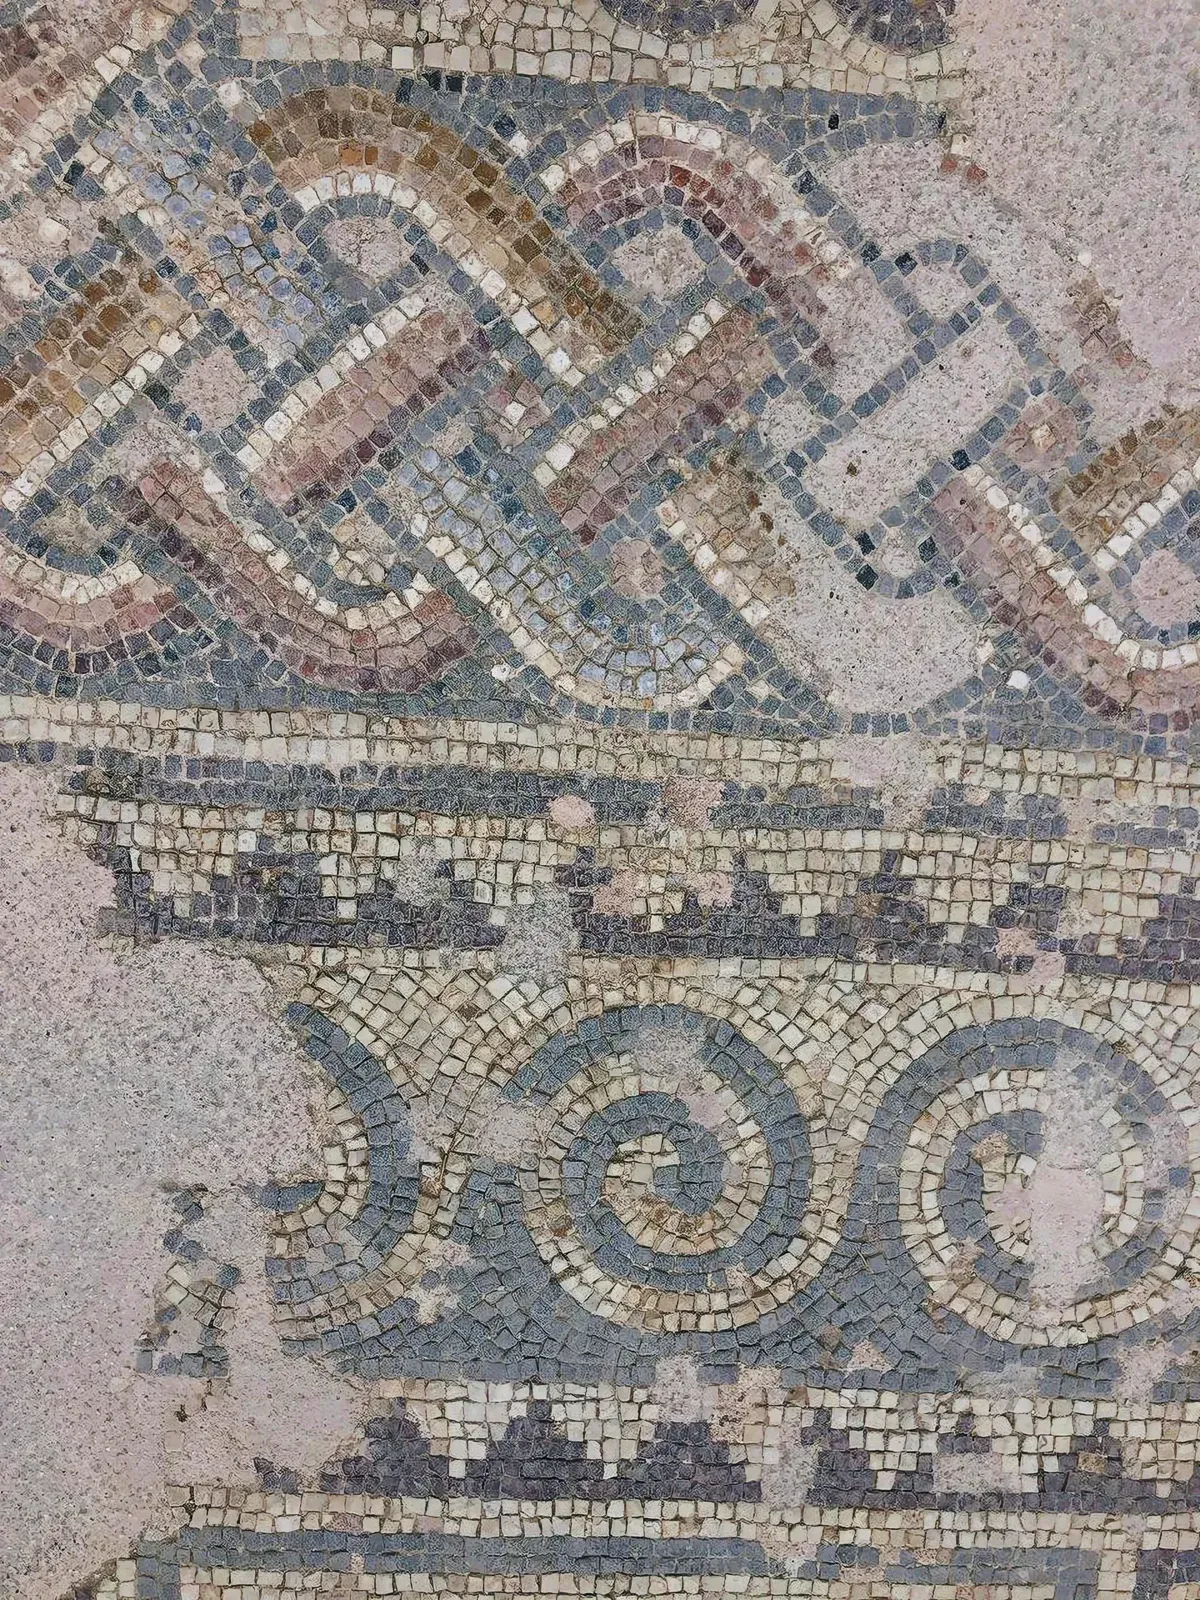 Intricate mosaic art on the ground